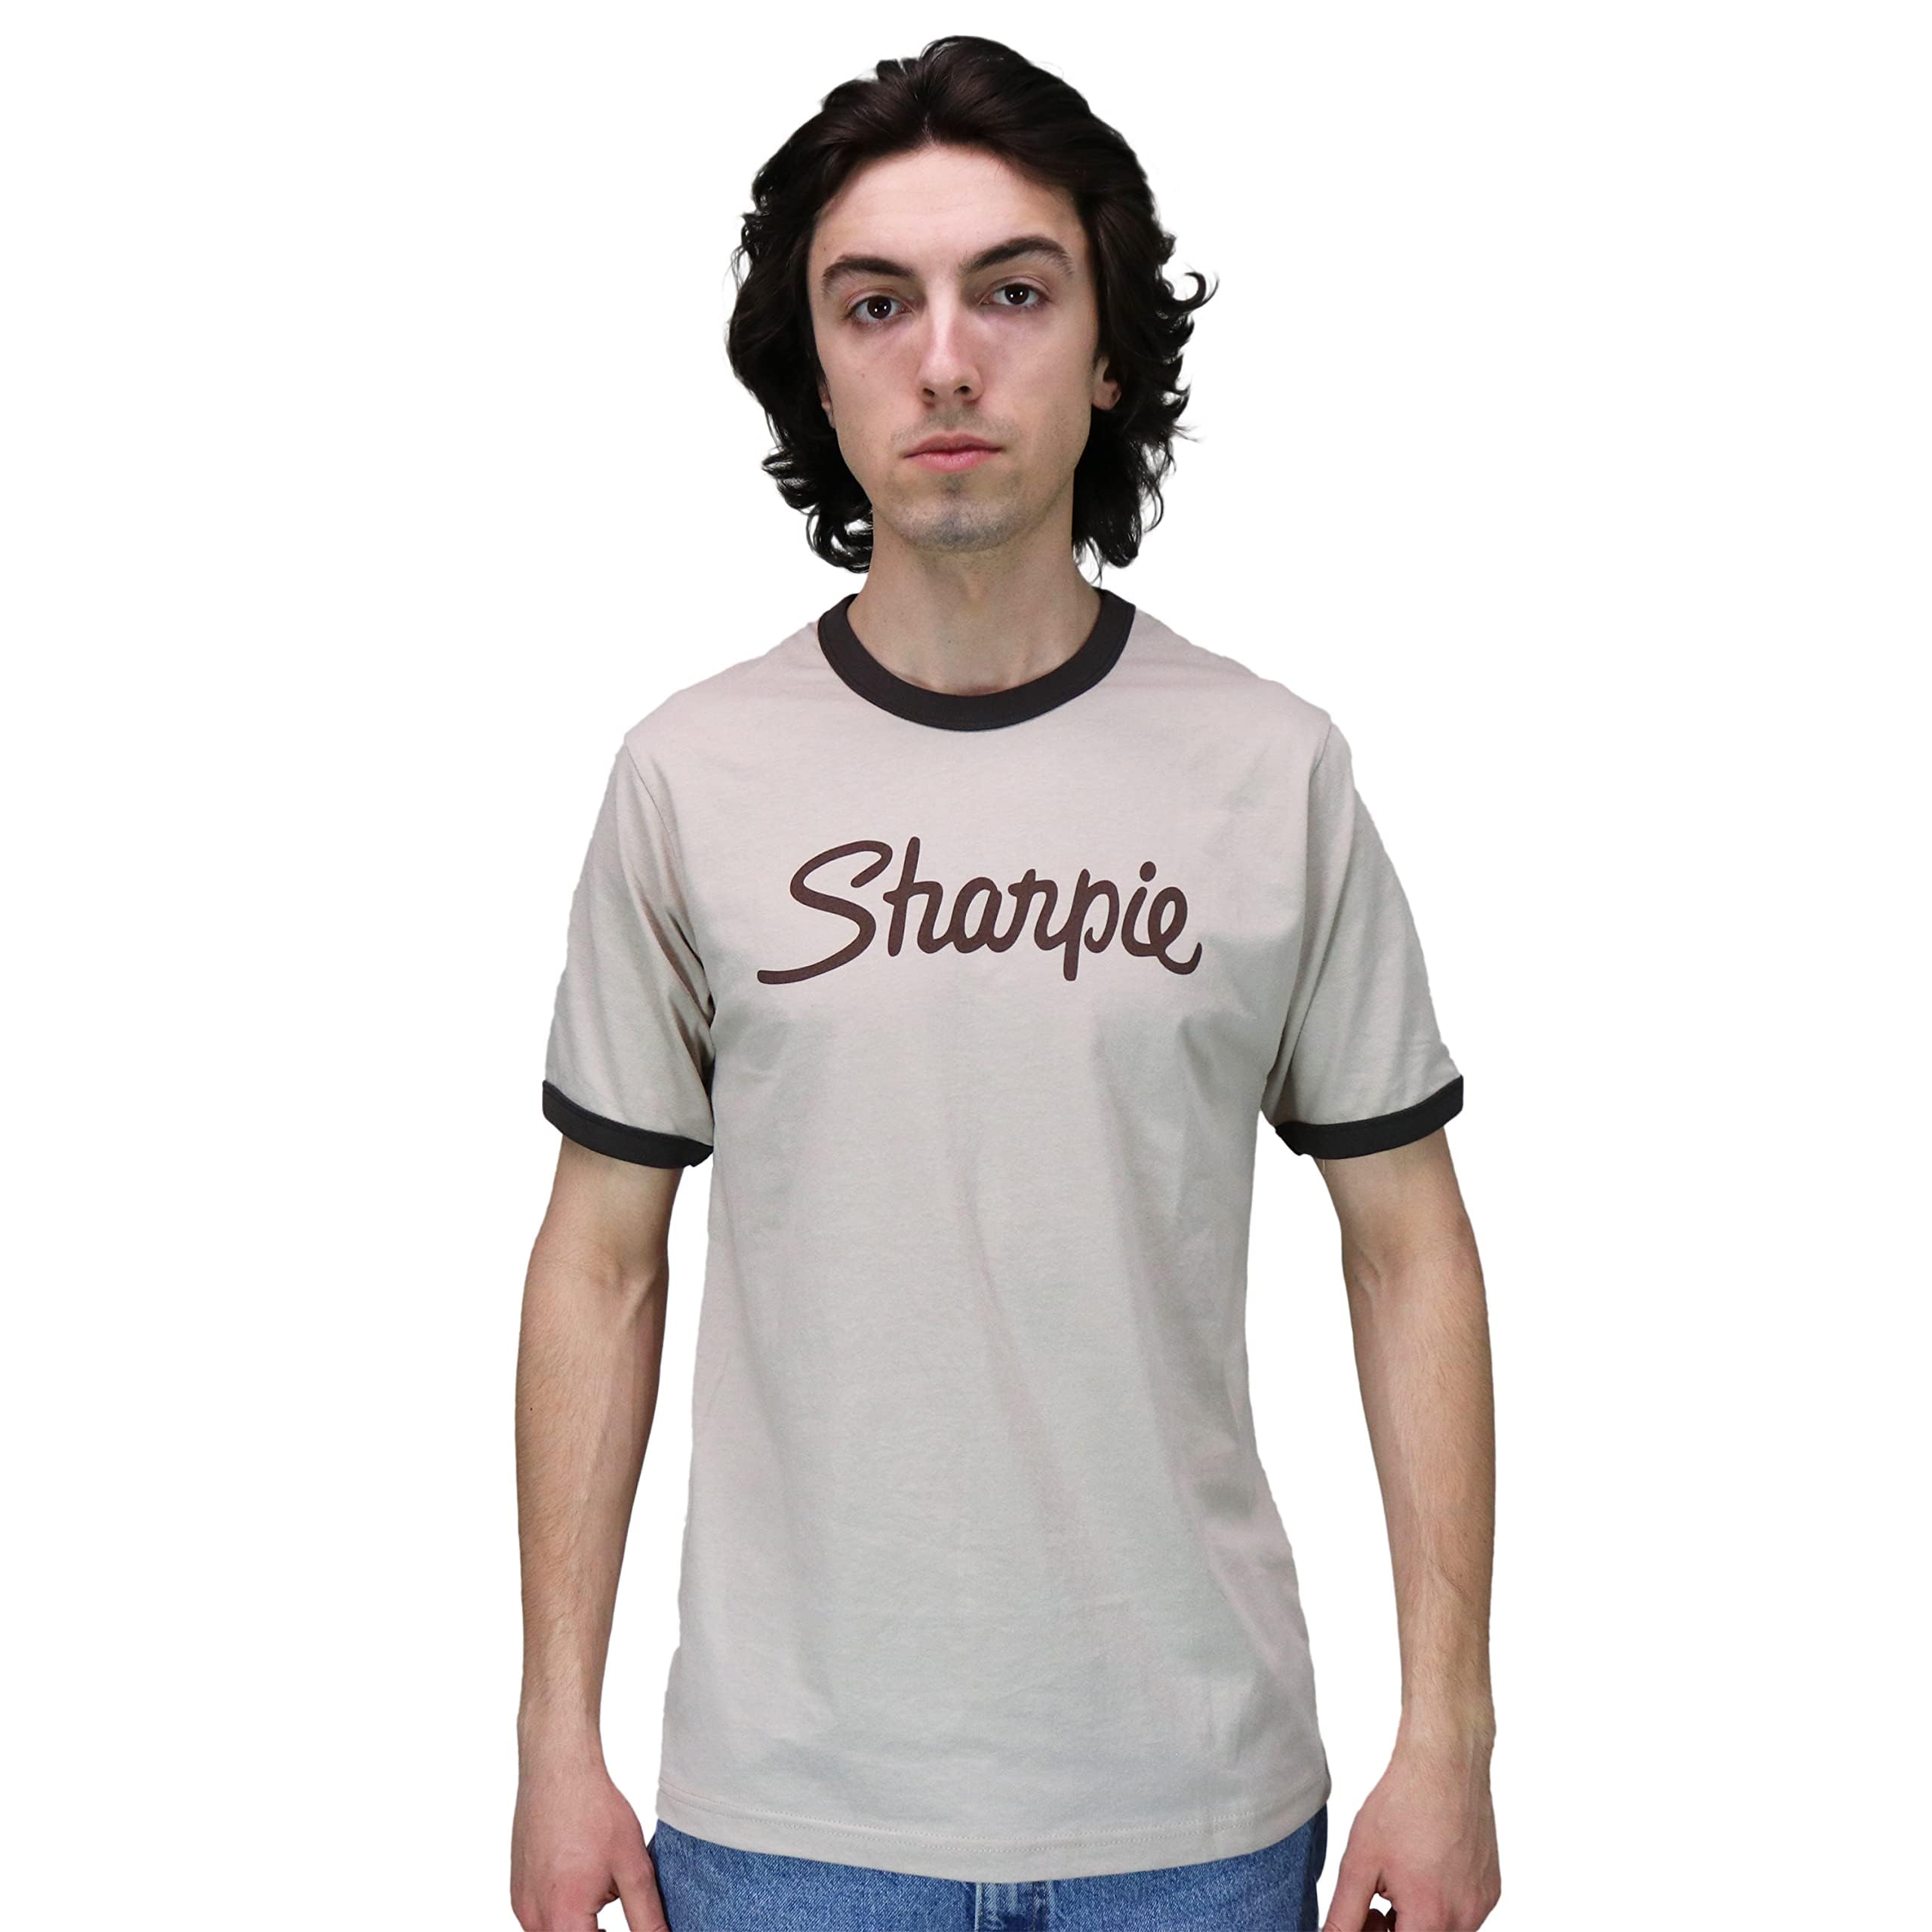 Sharpie Ringer Shirt Heather Brown Pilgrim Rock Band Adult T-Shirt Tee